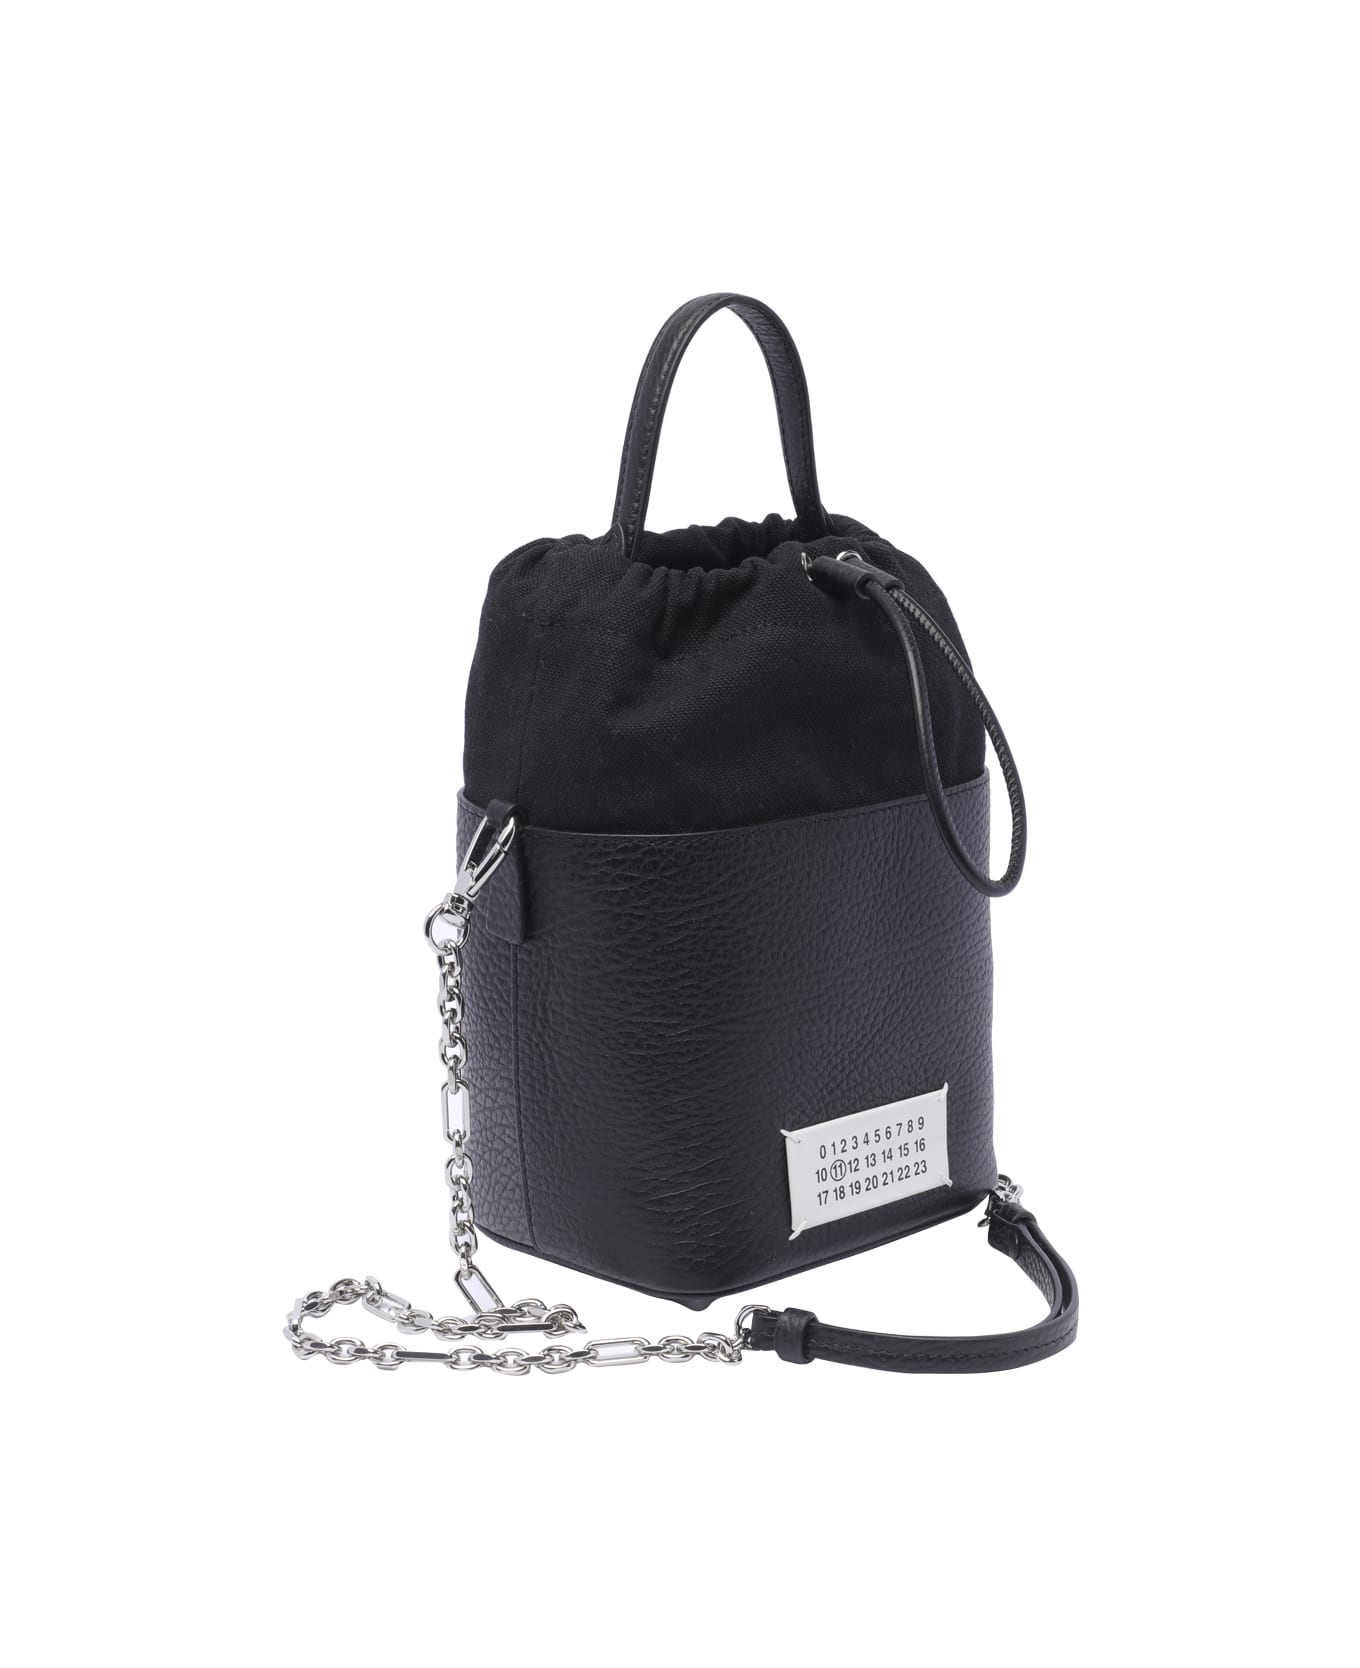 Maison Margiela 5ac Small Bucket Bag - Black